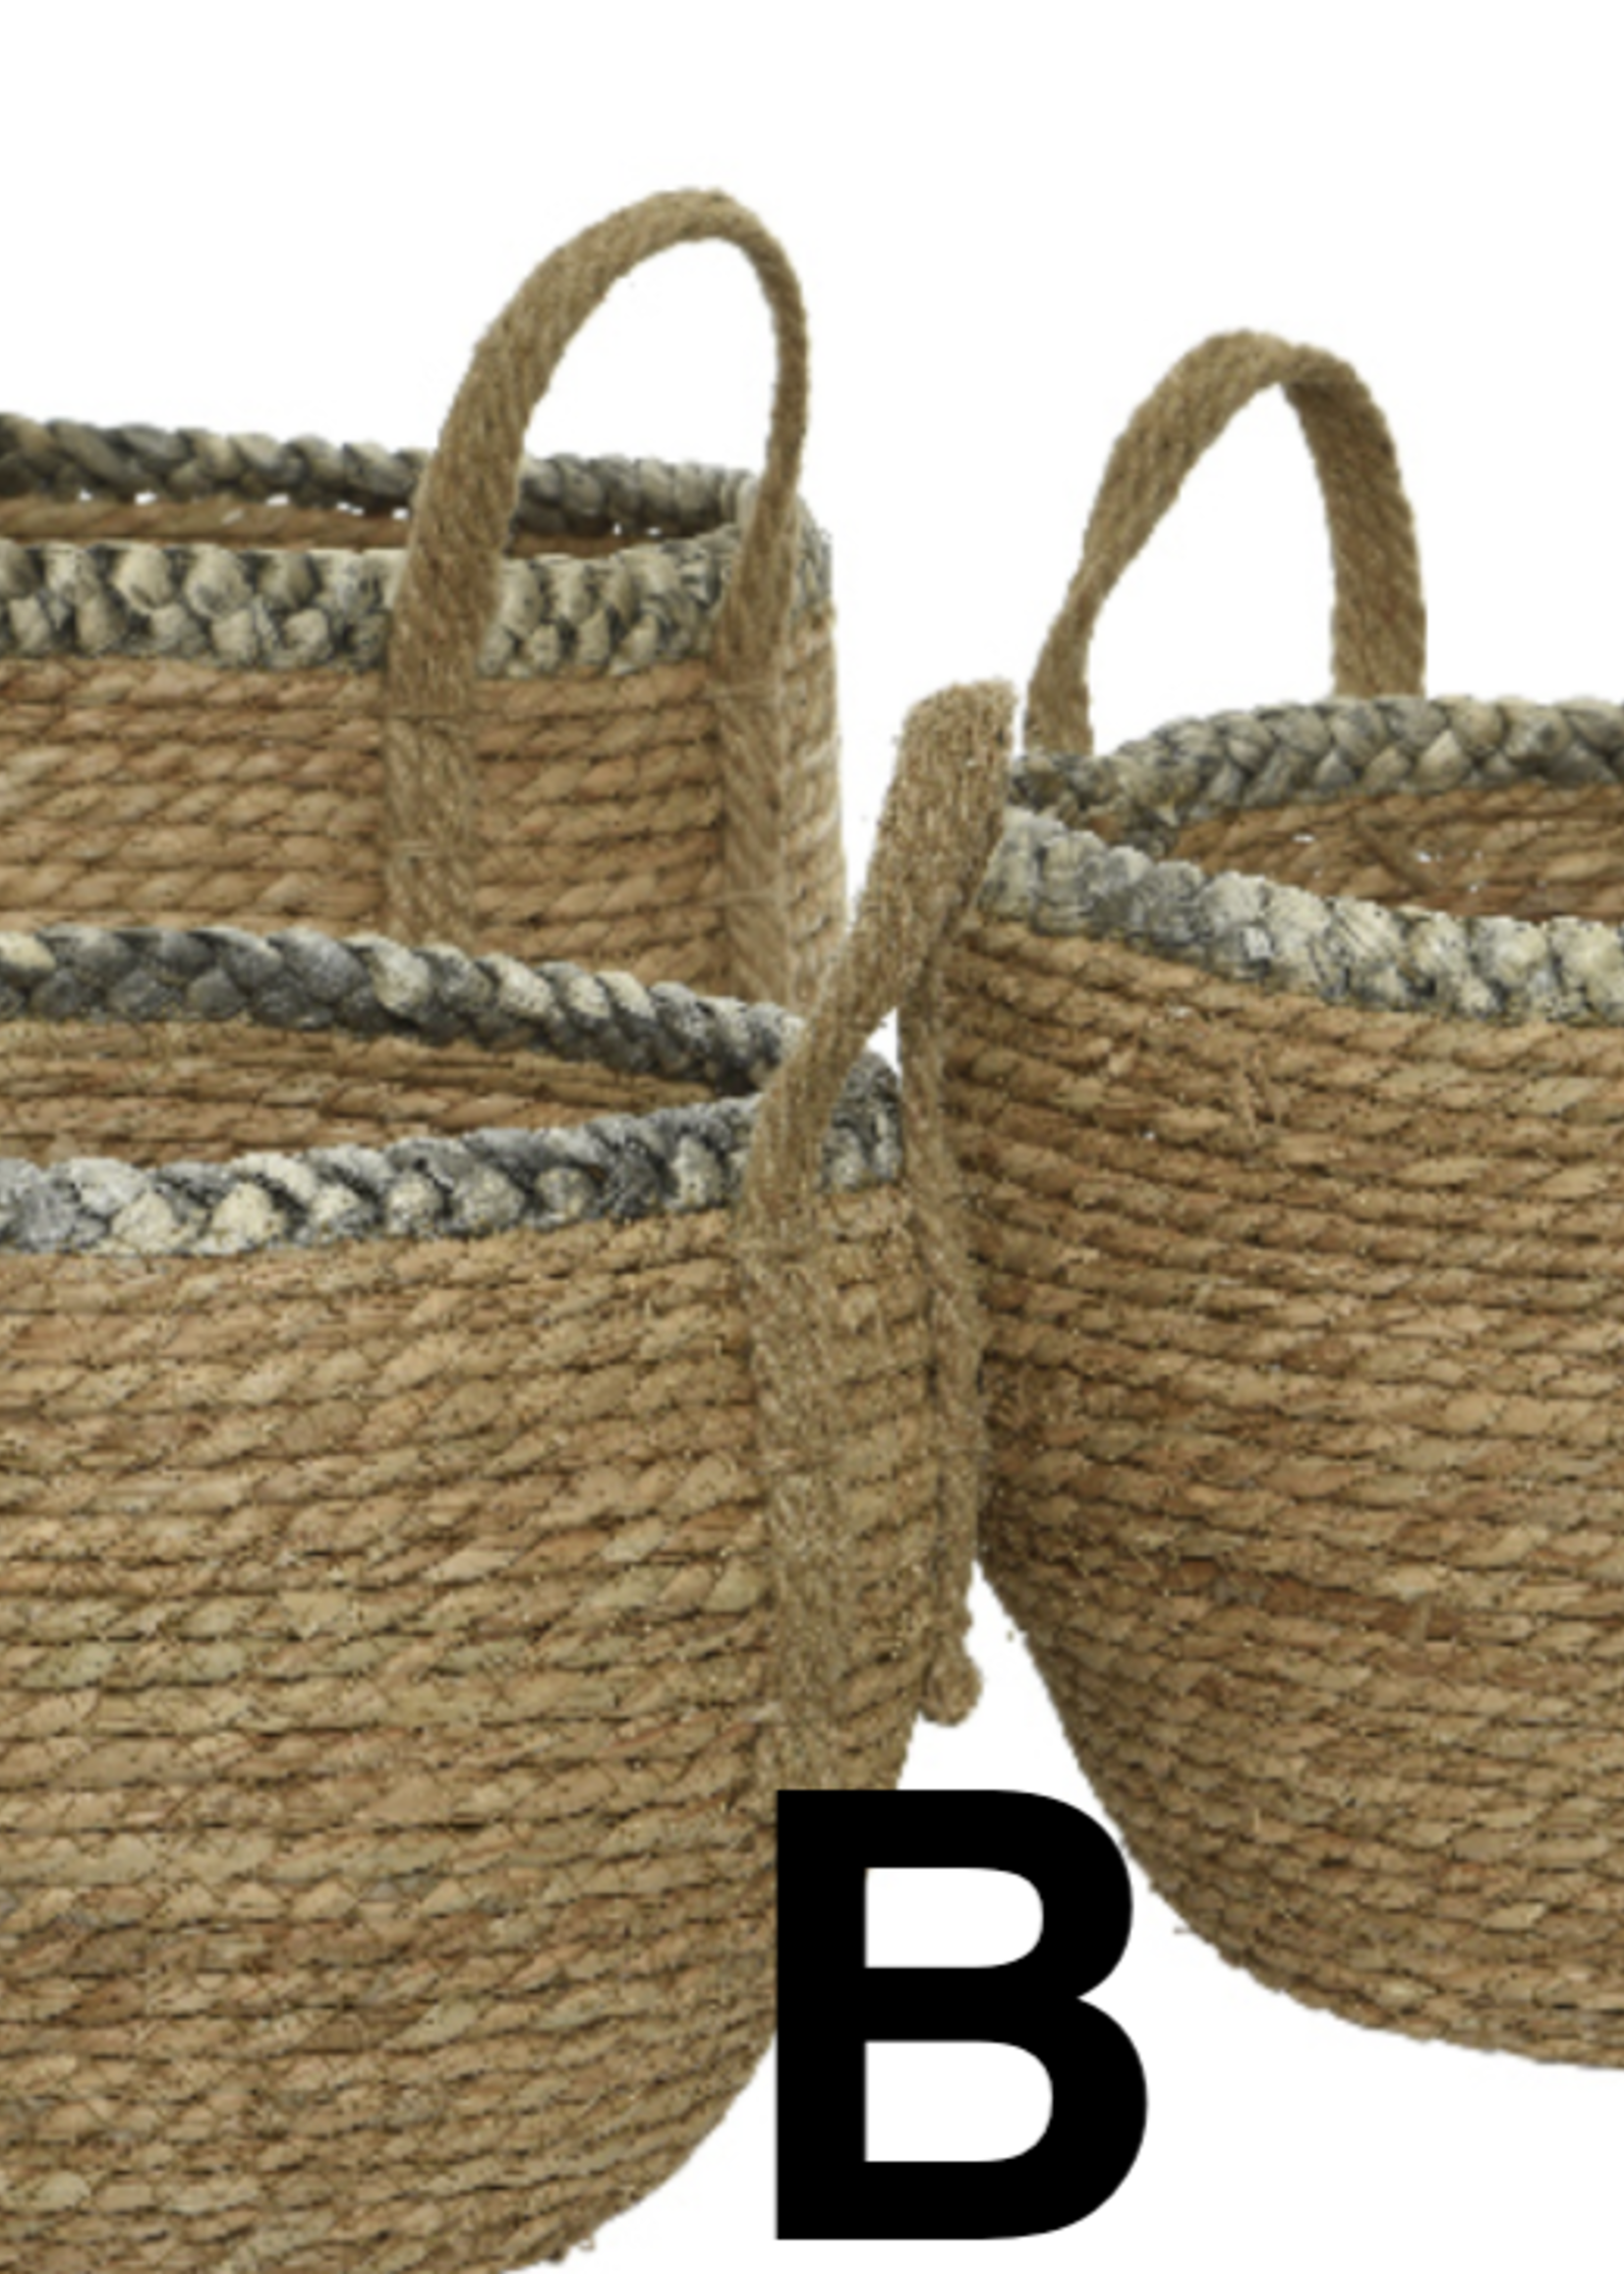 Decoris Basket rush grass braided cornleaf Medium 30cm